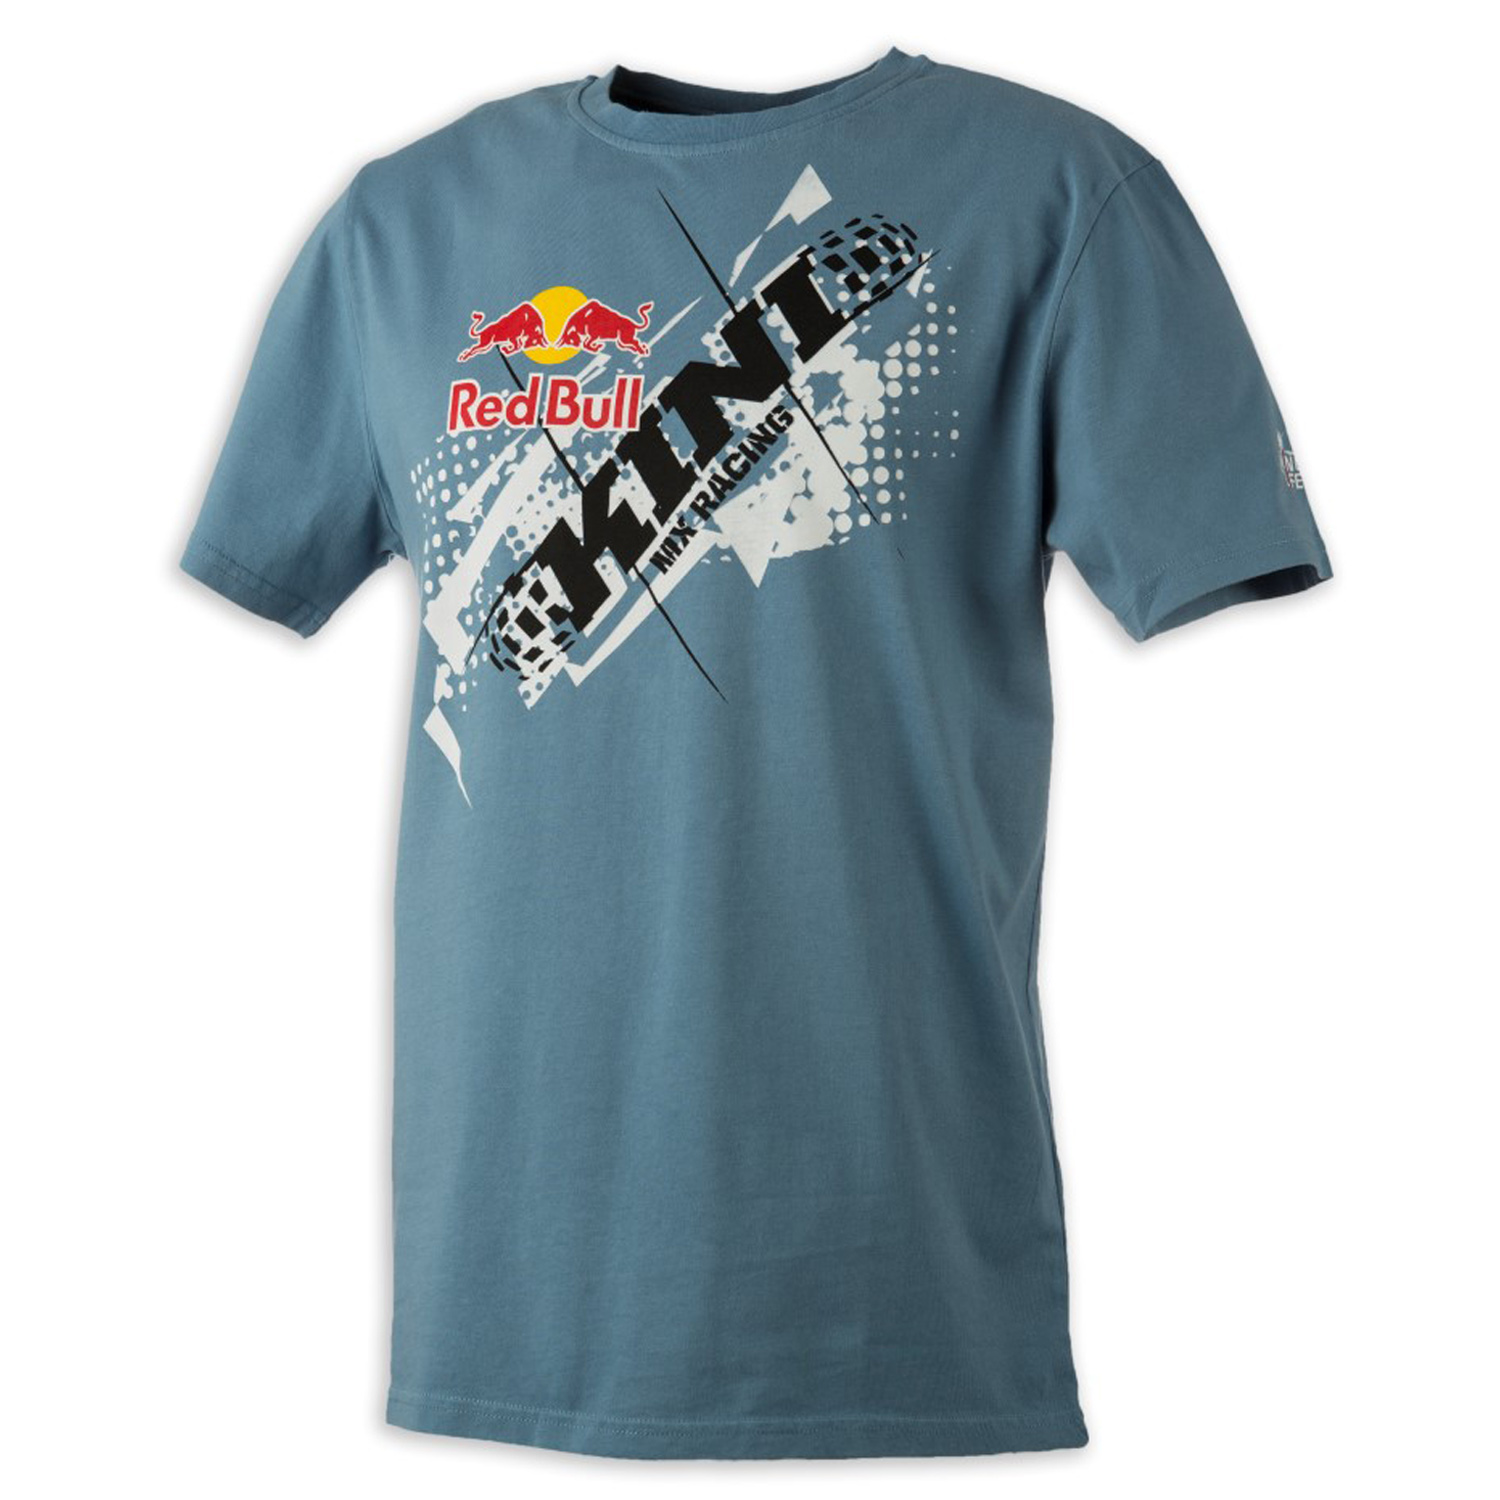 Kini Red Bull T-Shirt Chopped Blau